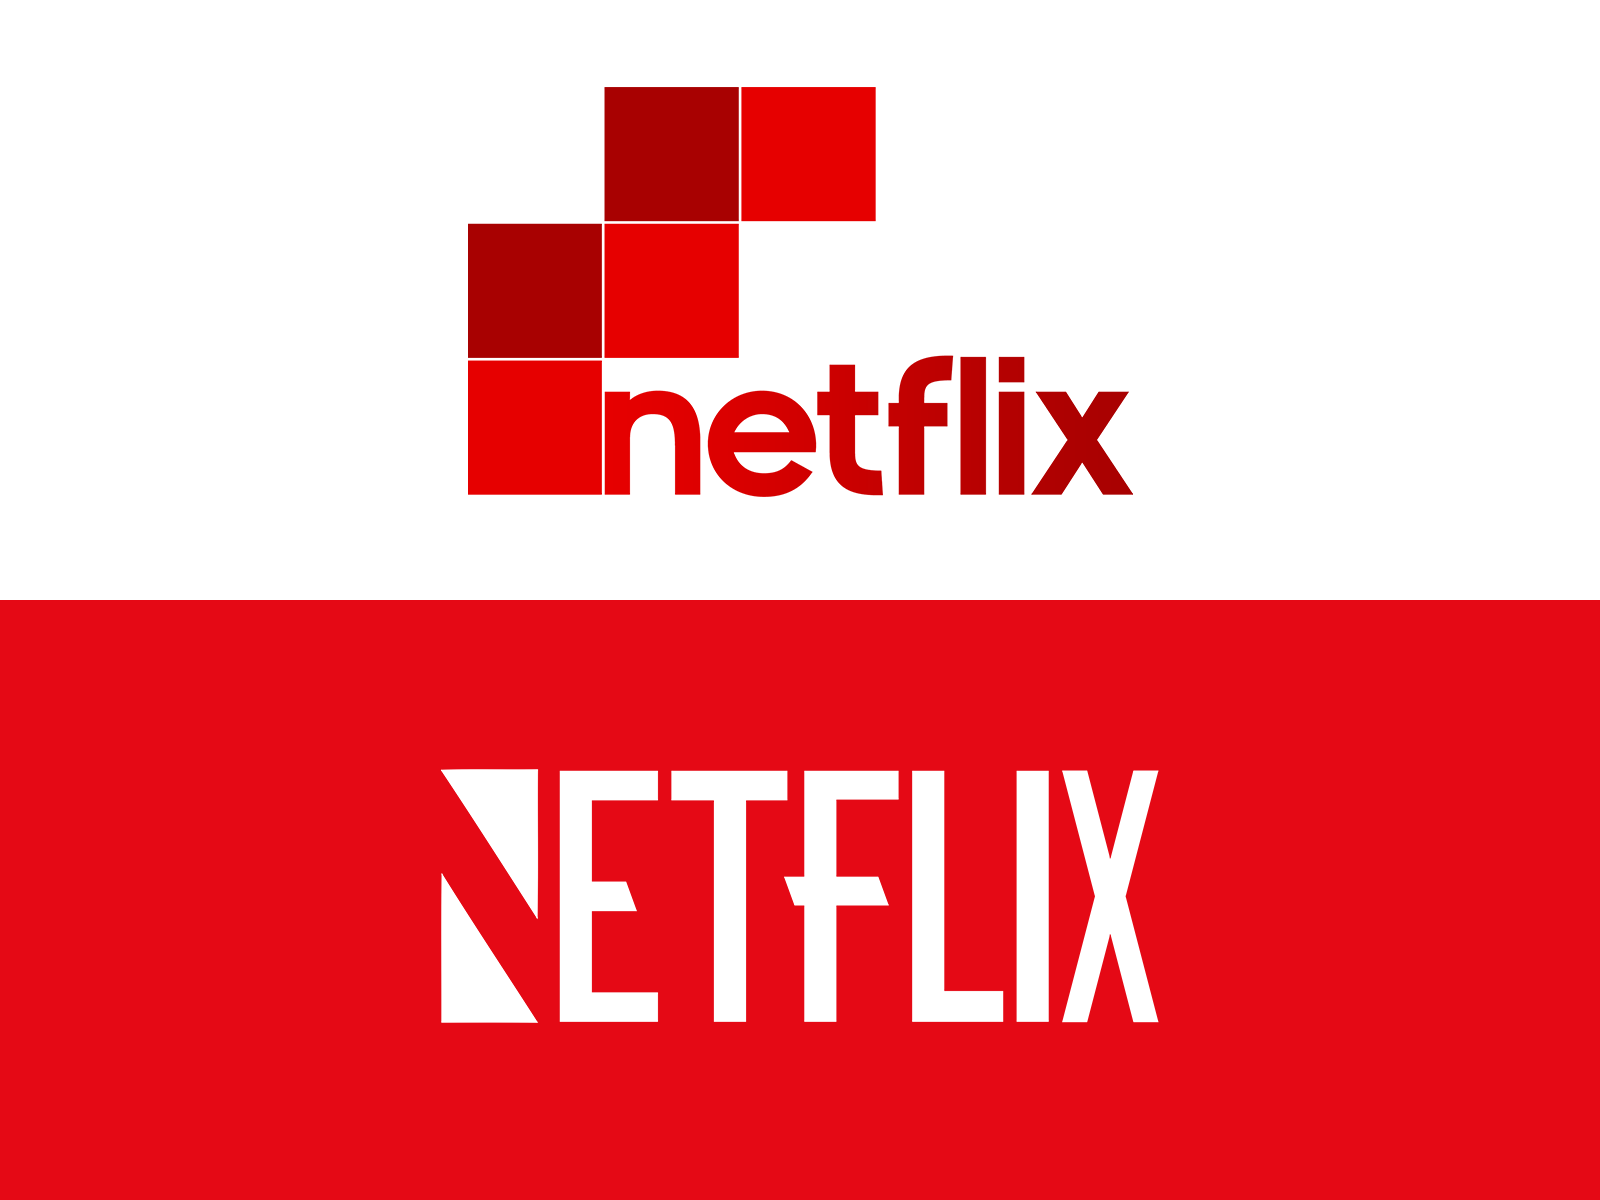 Netflix Rebrand by Çlirim Gashi on Dribbble